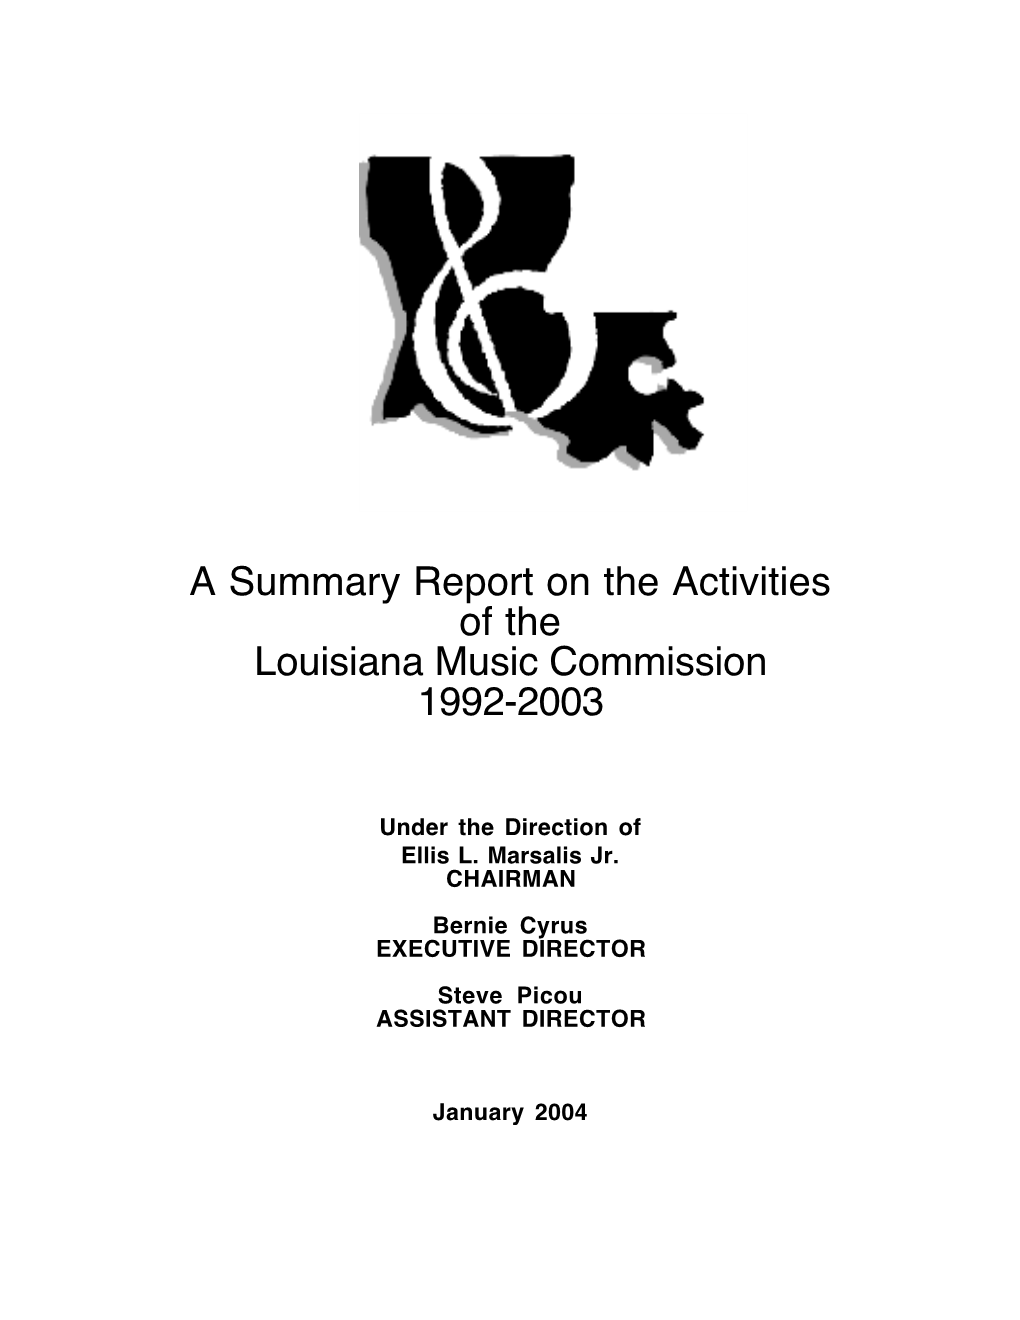 LMC Summary Report 1992-2003